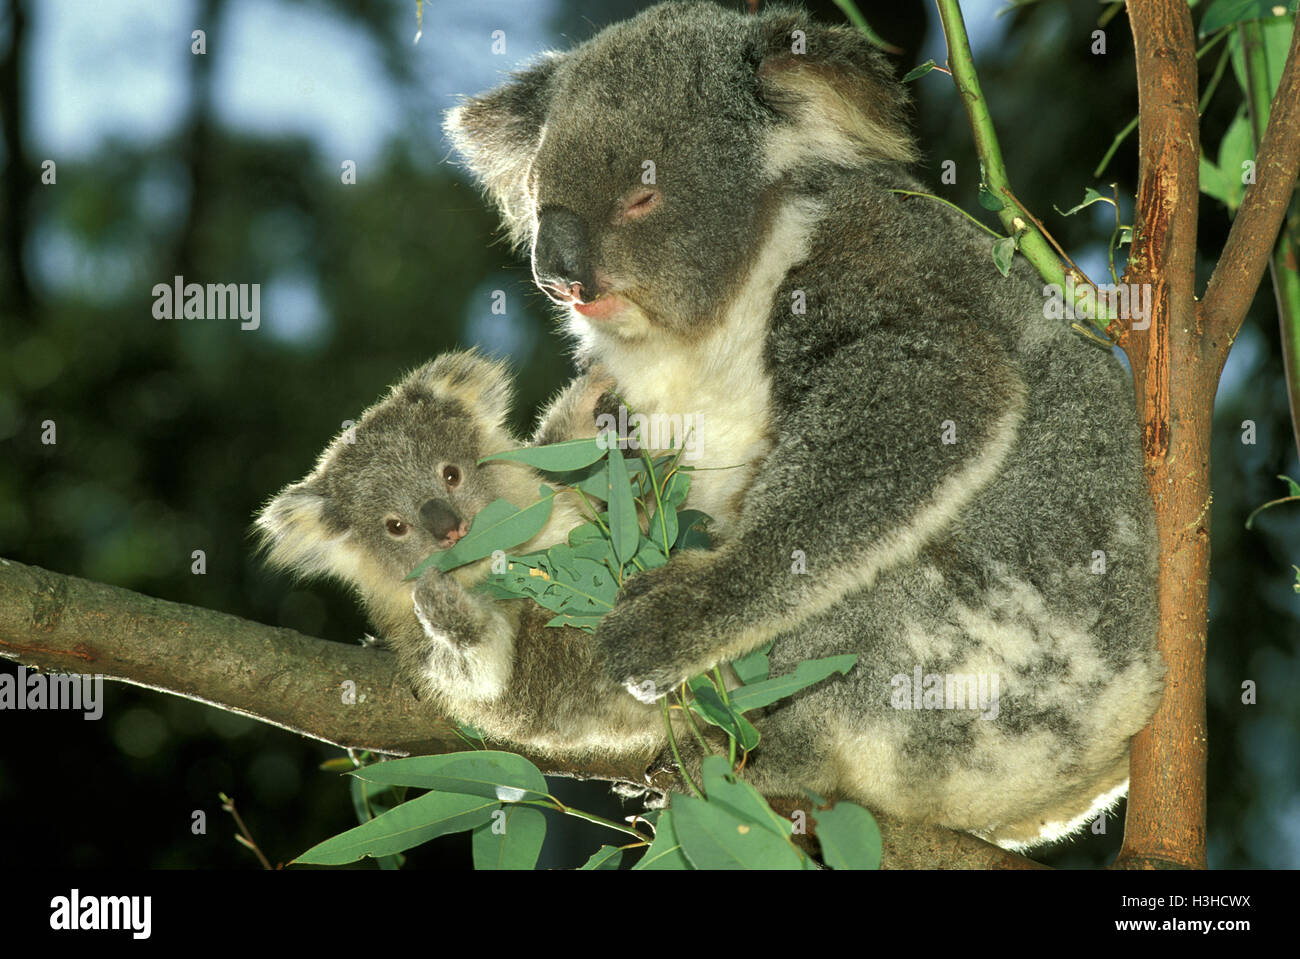 Koala (Phascolarctos cinereus) Stock Photo